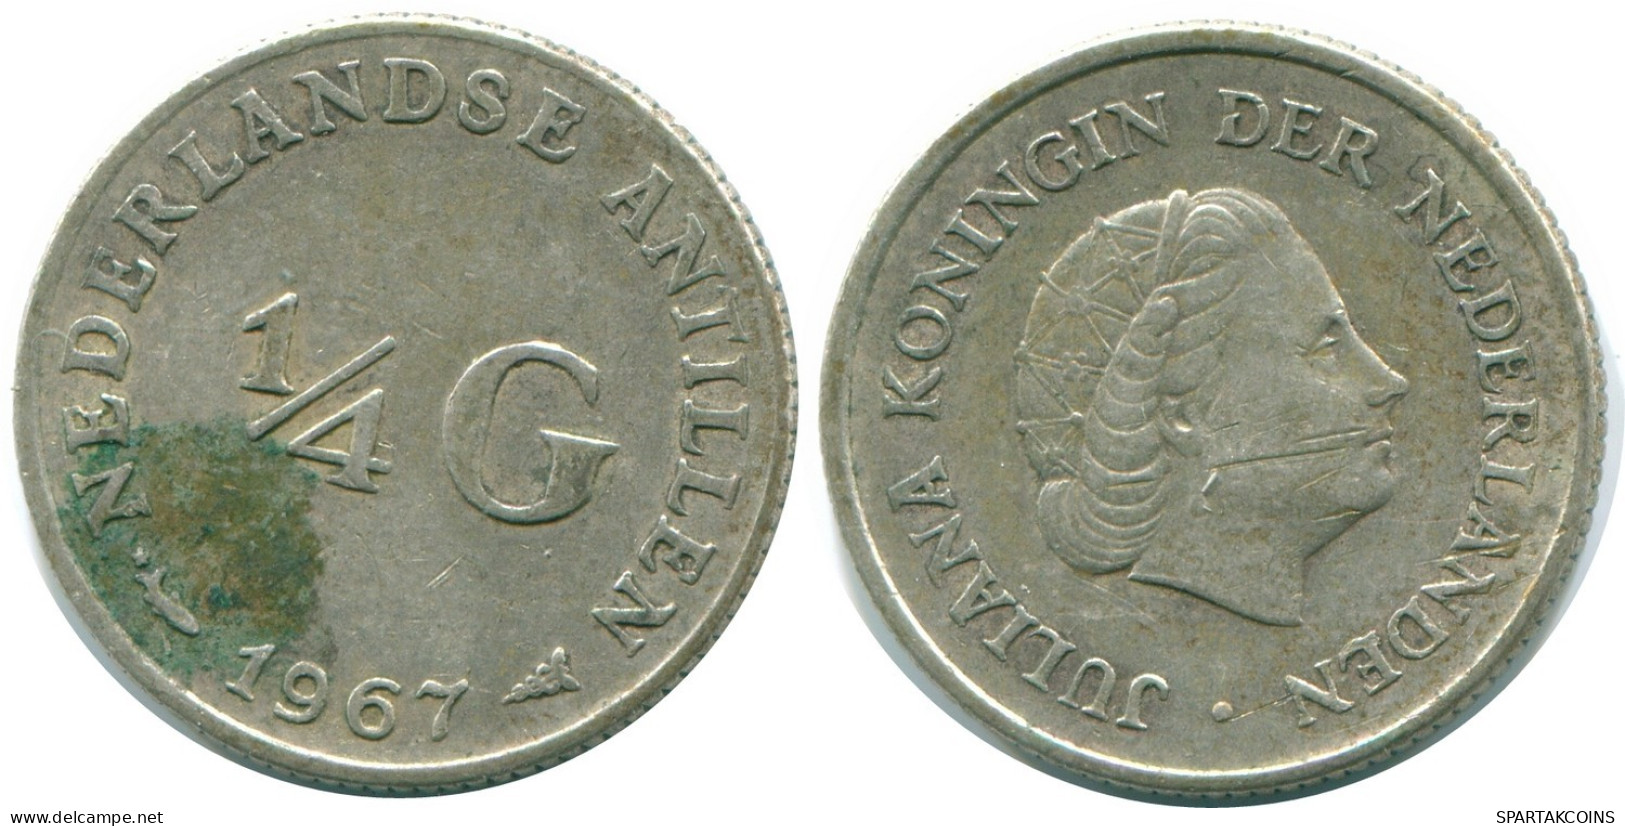 1/4 GULDEN 1967 NETHERLANDS ANTILLES SILVER Colonial Coin #NL11569.4.U.A - Netherlands Antilles